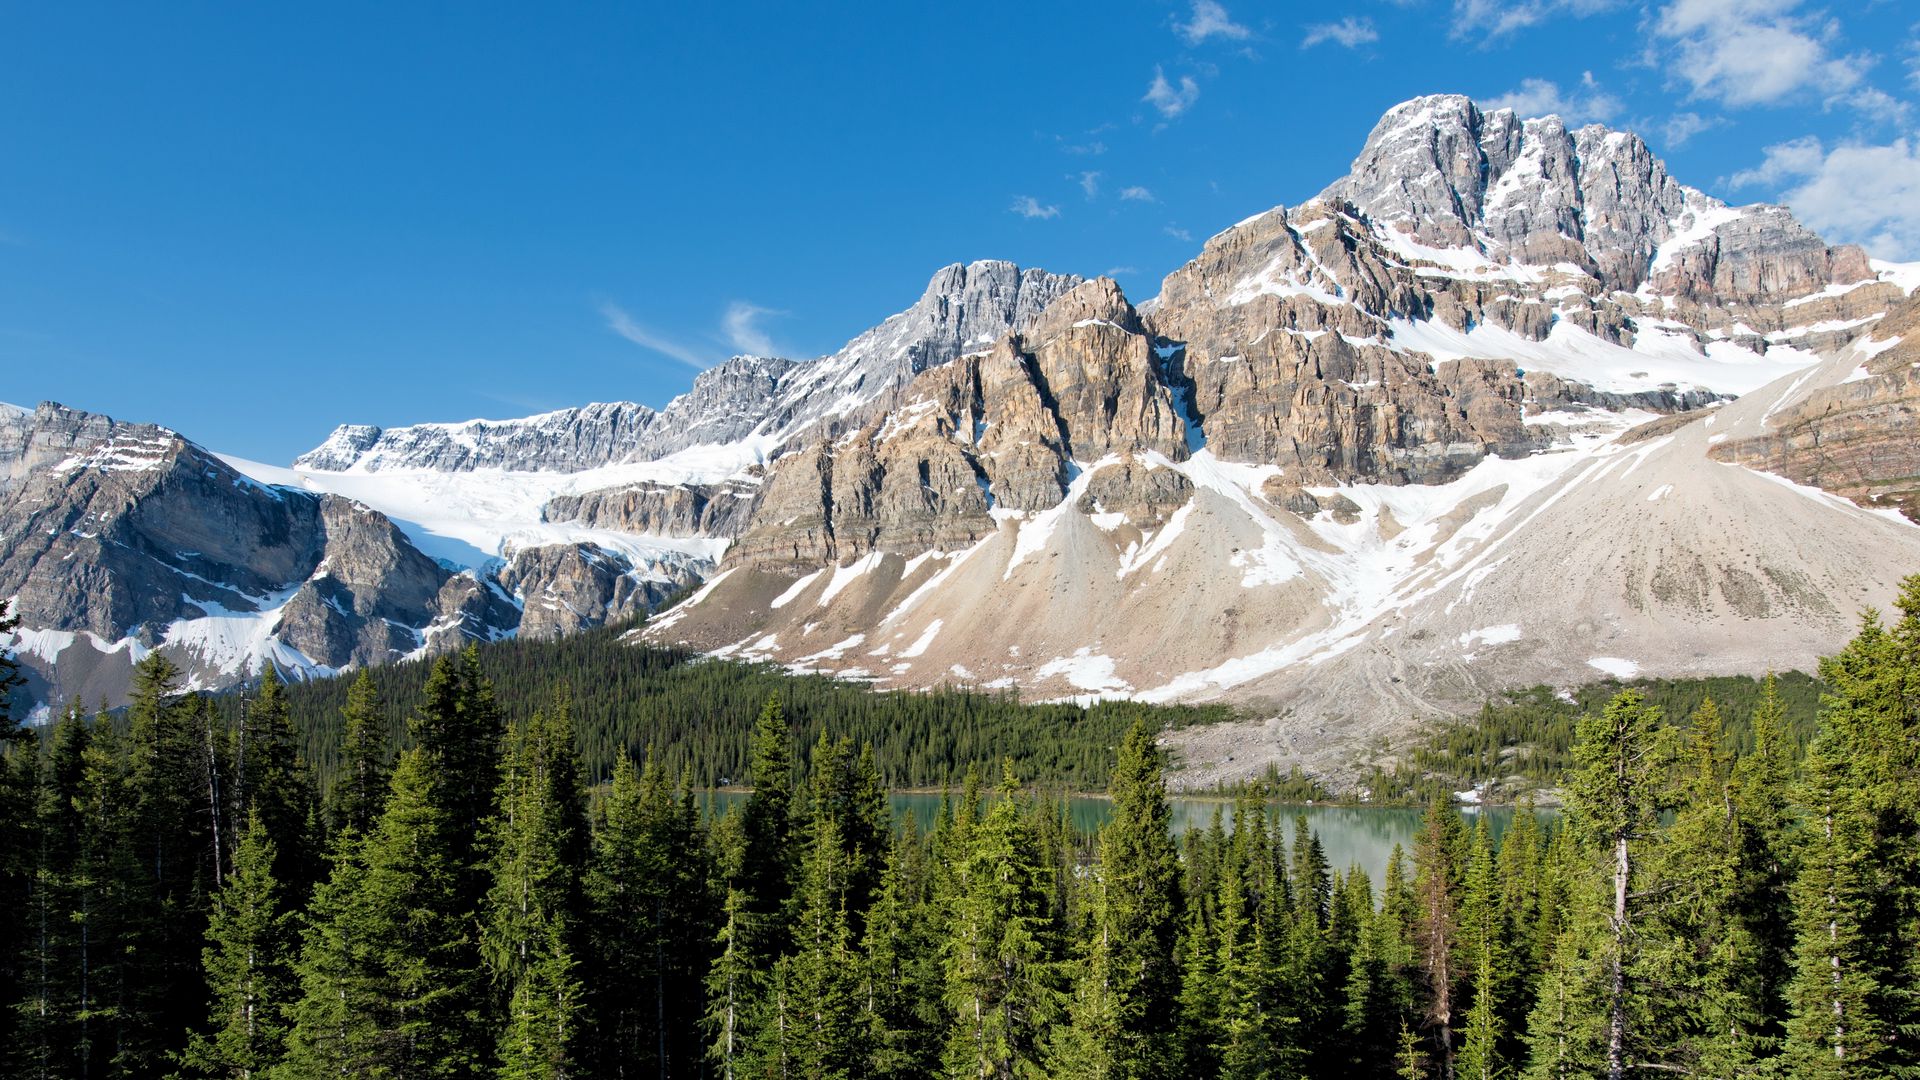 Desktop Wallpaper Mountains Of Banff National Park, Hd Image, Picture,  Background, Ulkdhw